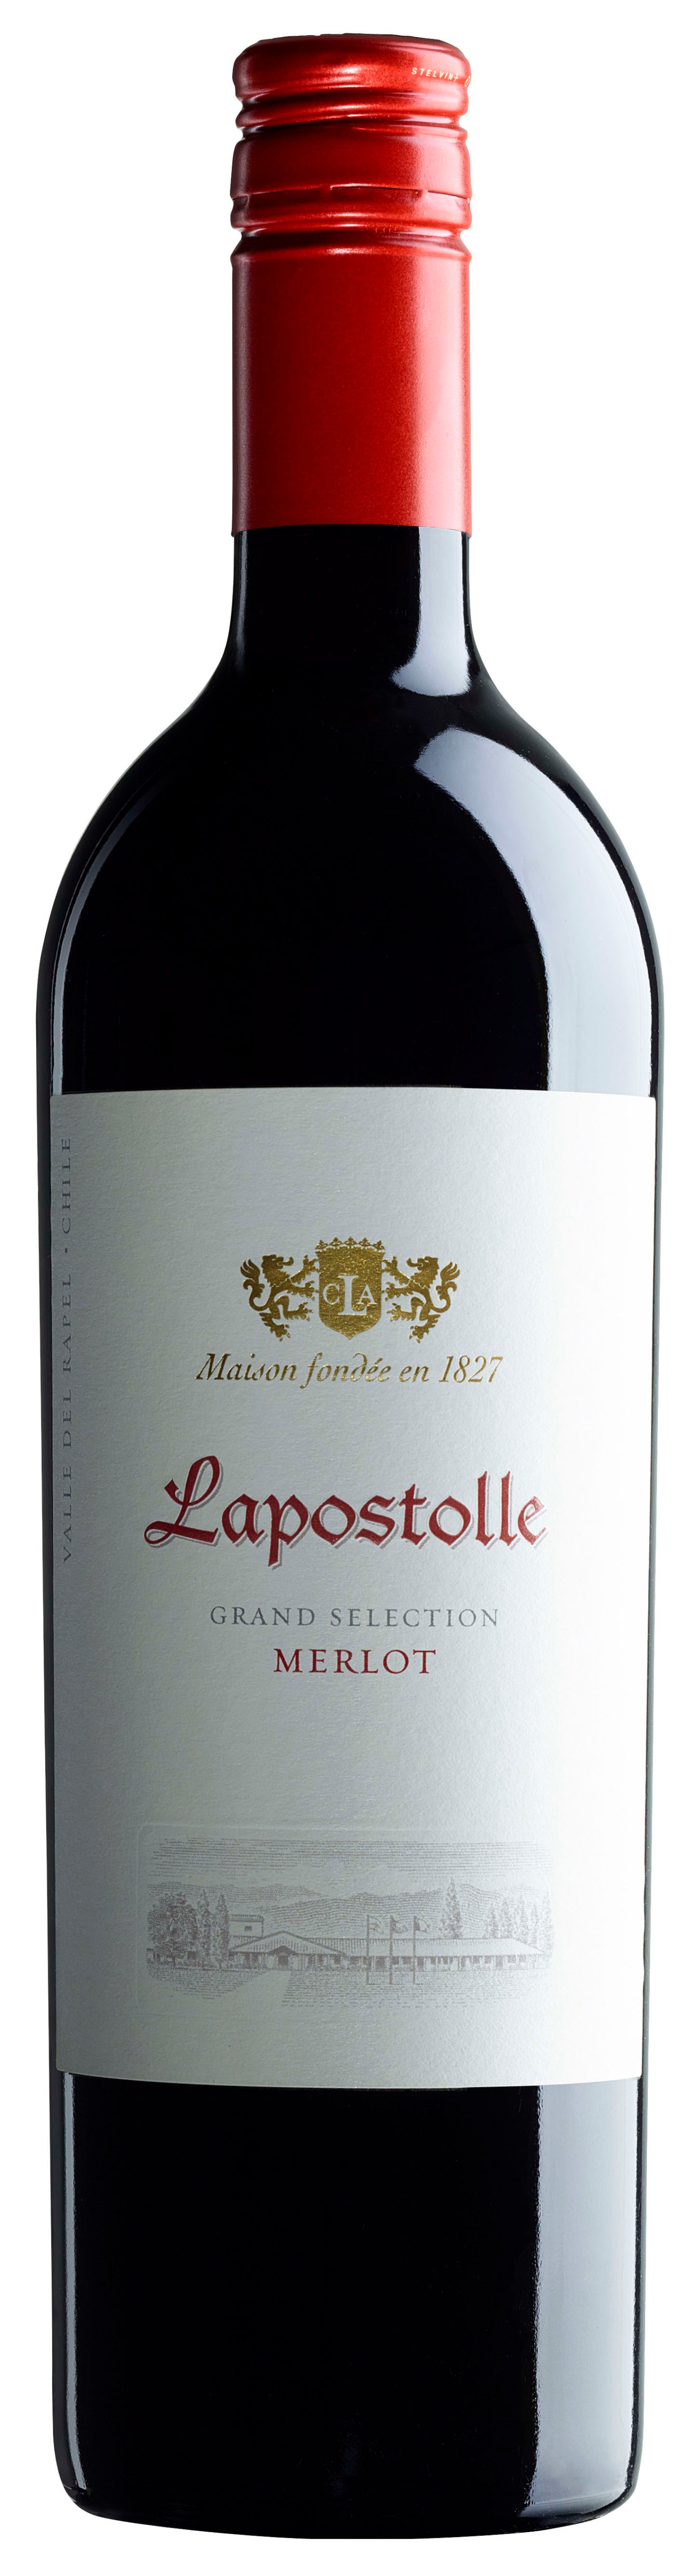 Lapostolle Merlot Grand Selection Casa 2015